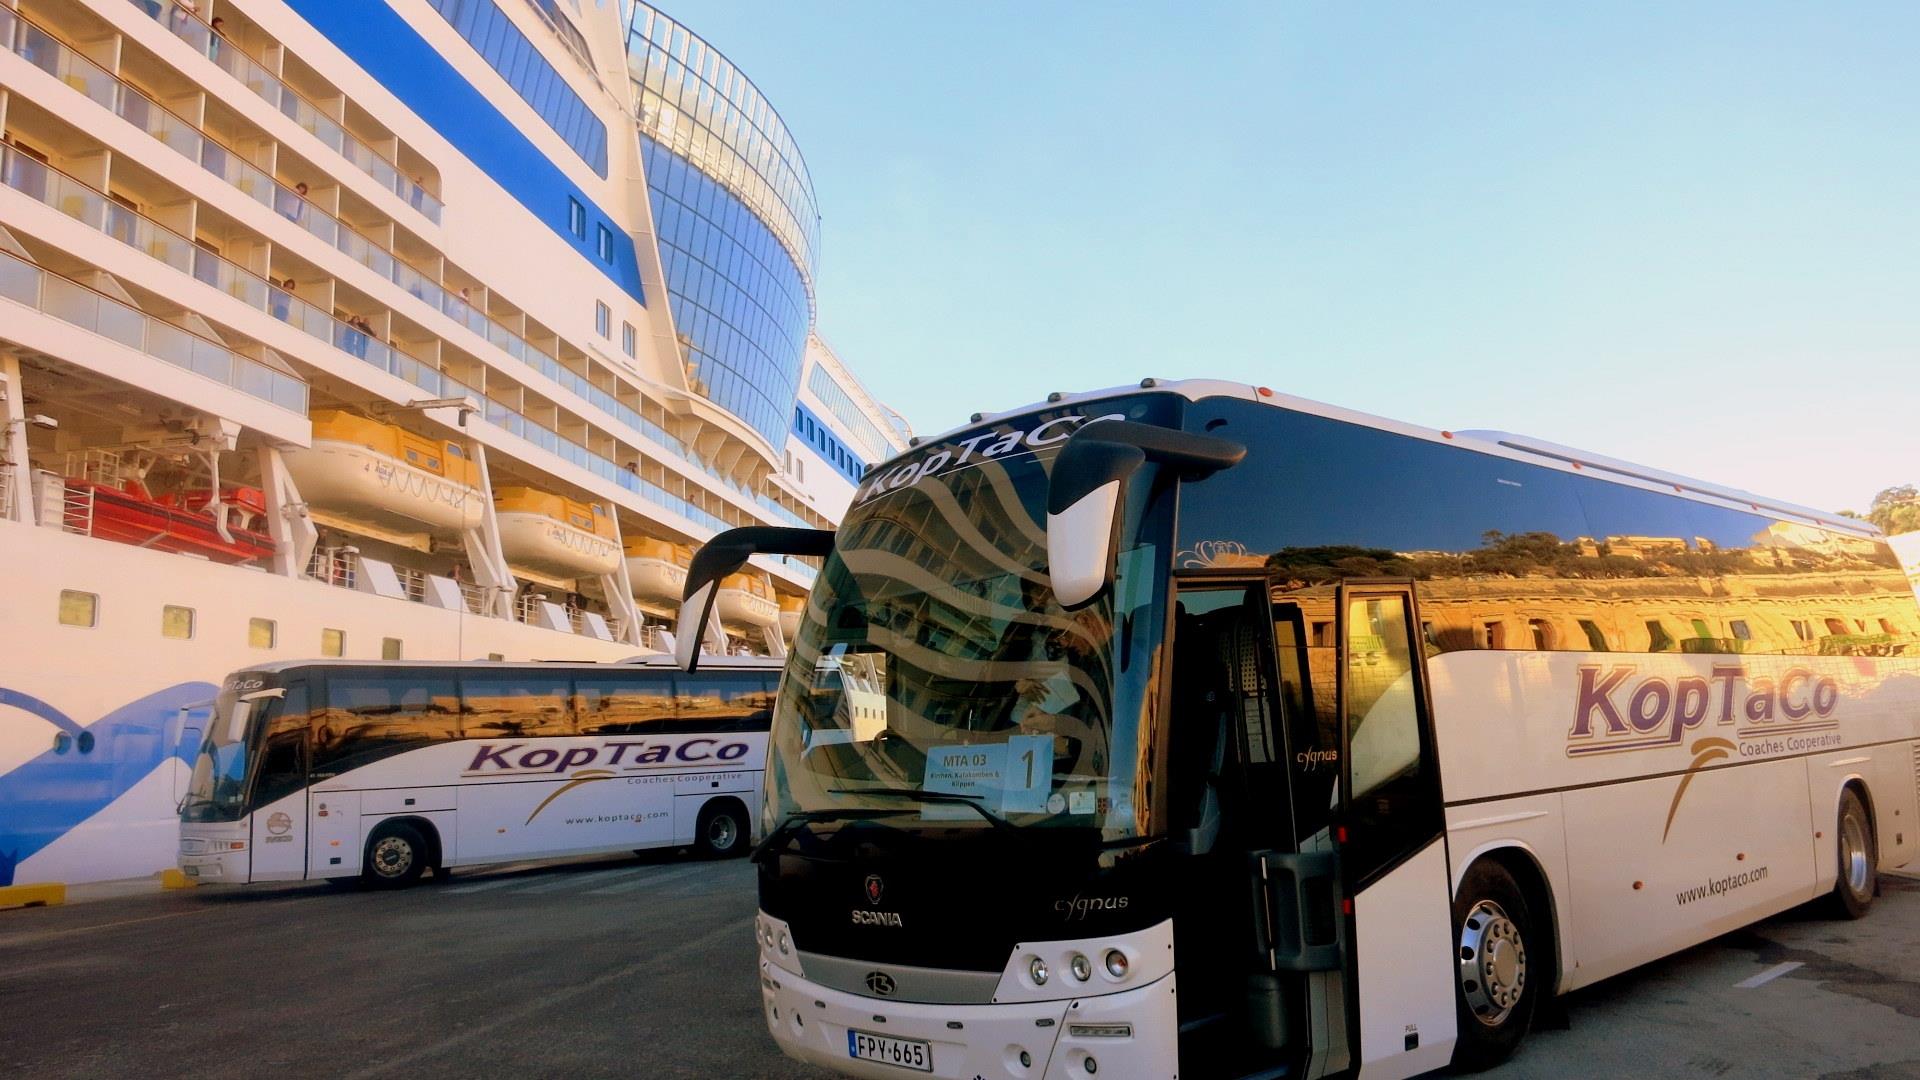 koptaco transport company cruise bus transfers tours